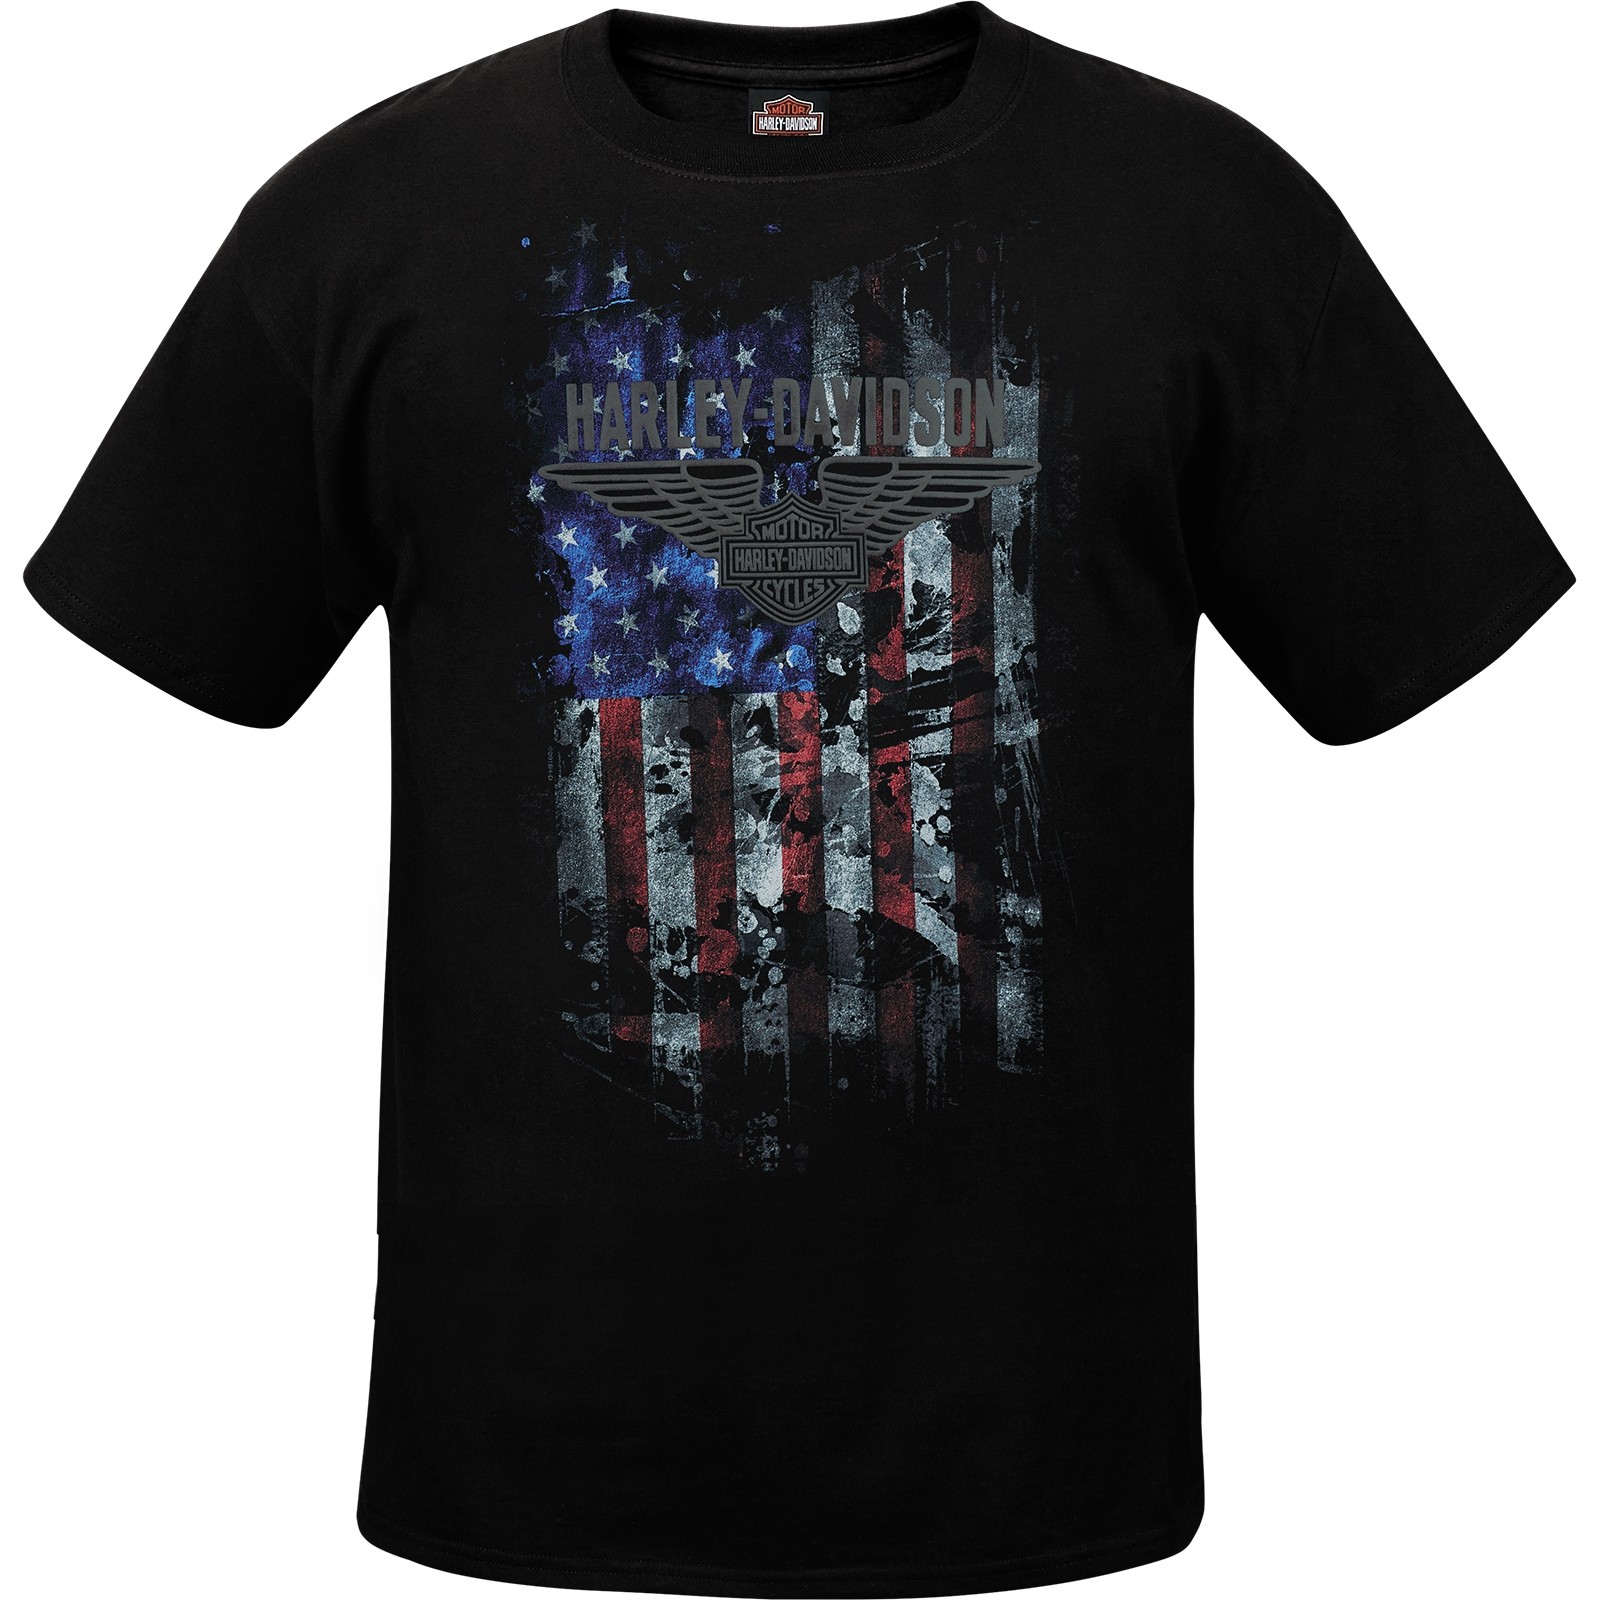  Harley Davidson Men s Graphic T Shirt MADE IN USA 